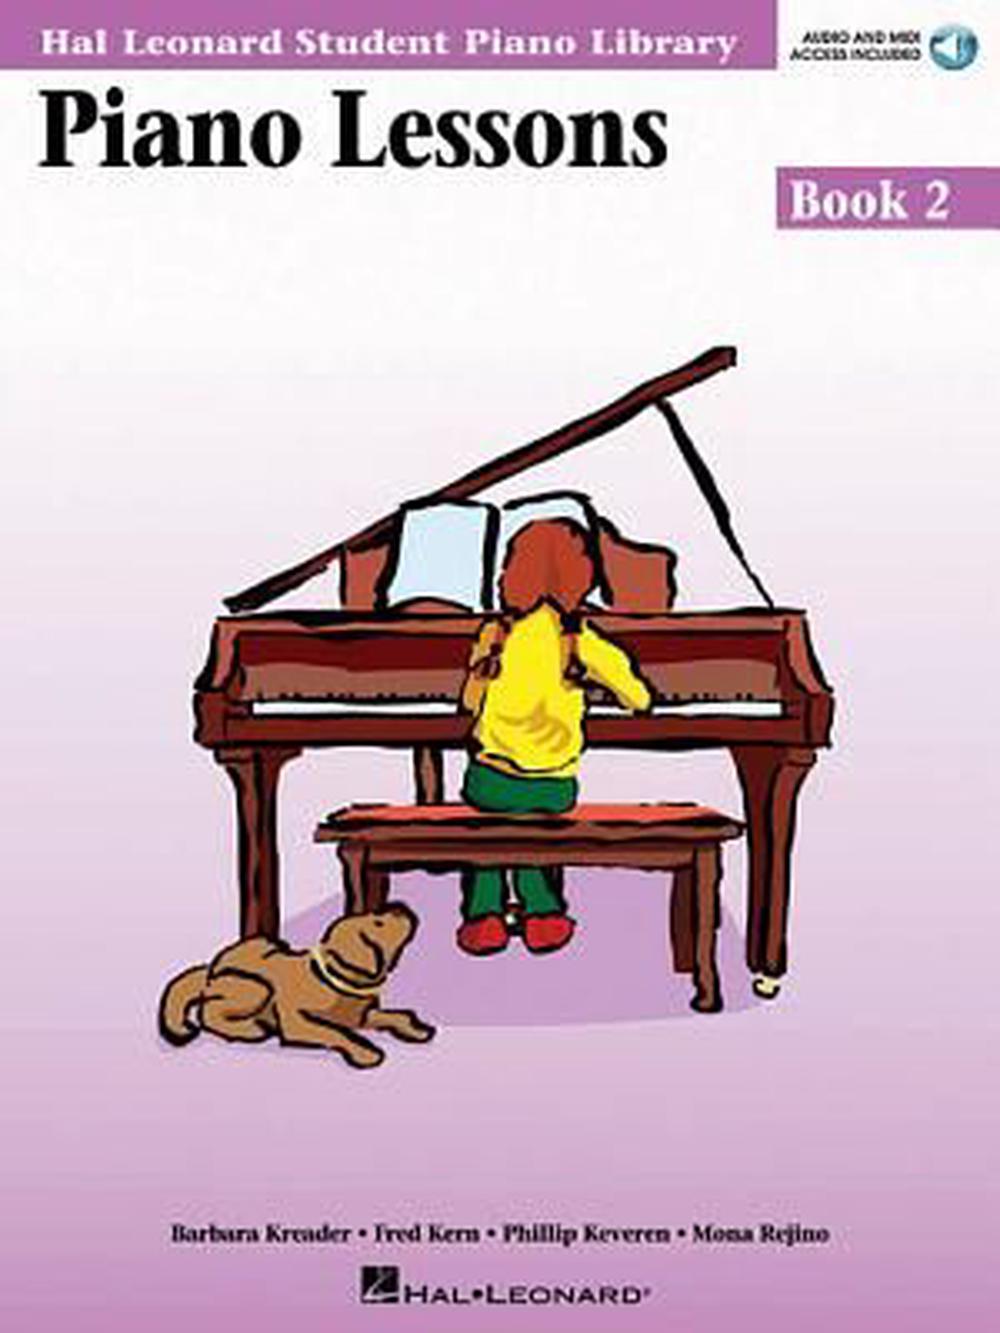 Hal Leonard Student Piano Library Piano Lessons Book 2 - Piano/Audio Access Online 298066